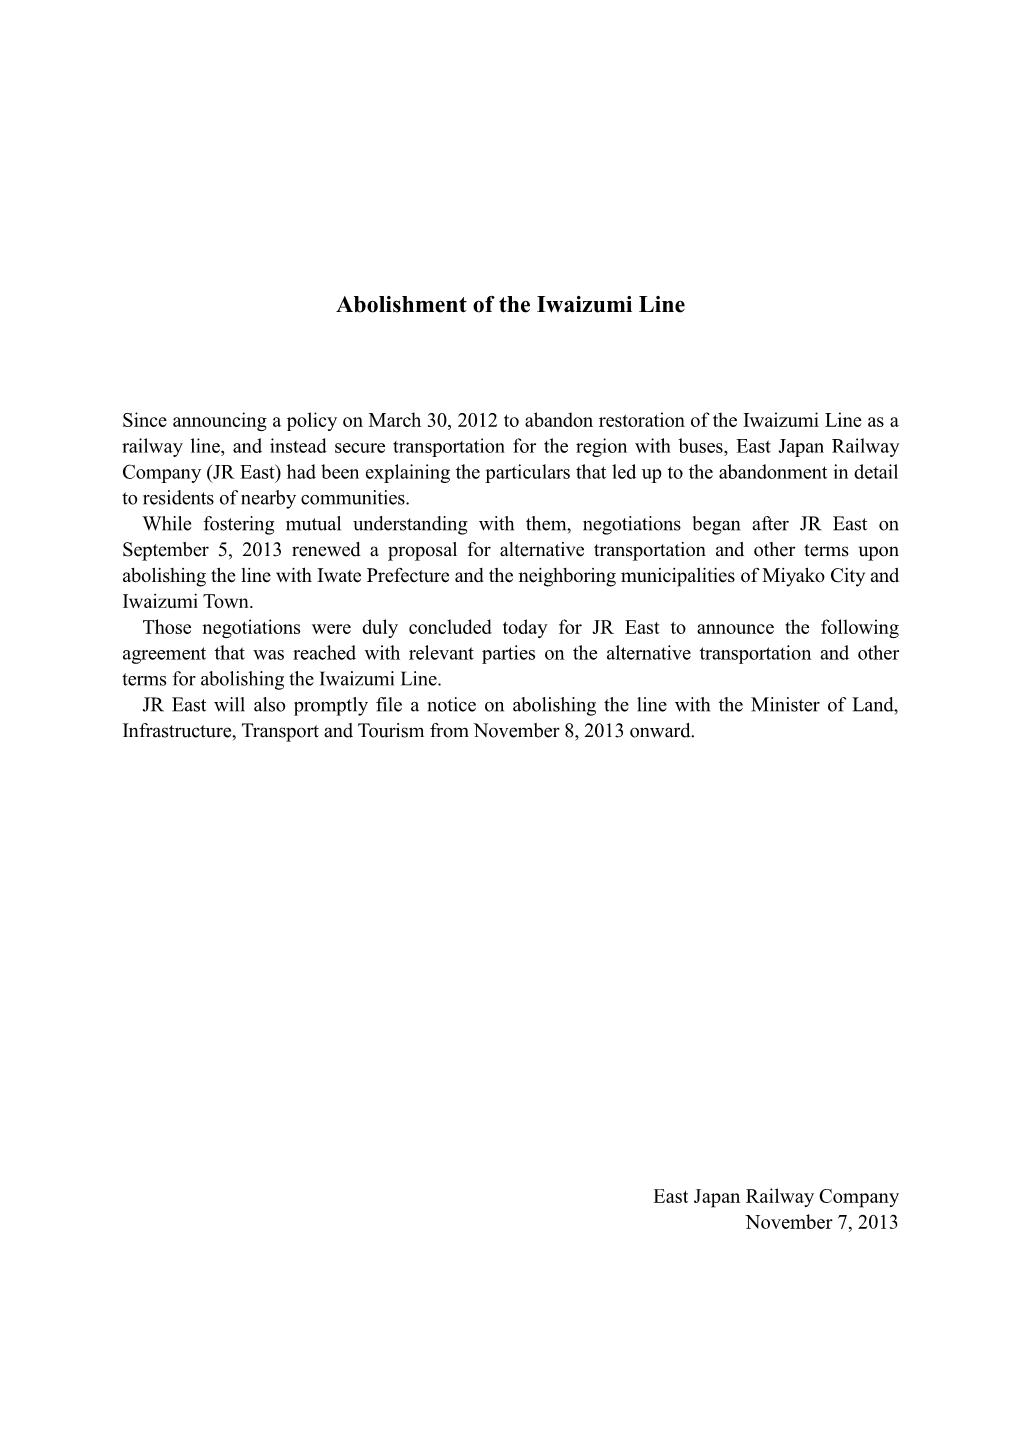 Abolishment of the Iwaizumi Line [PDF/70KB]